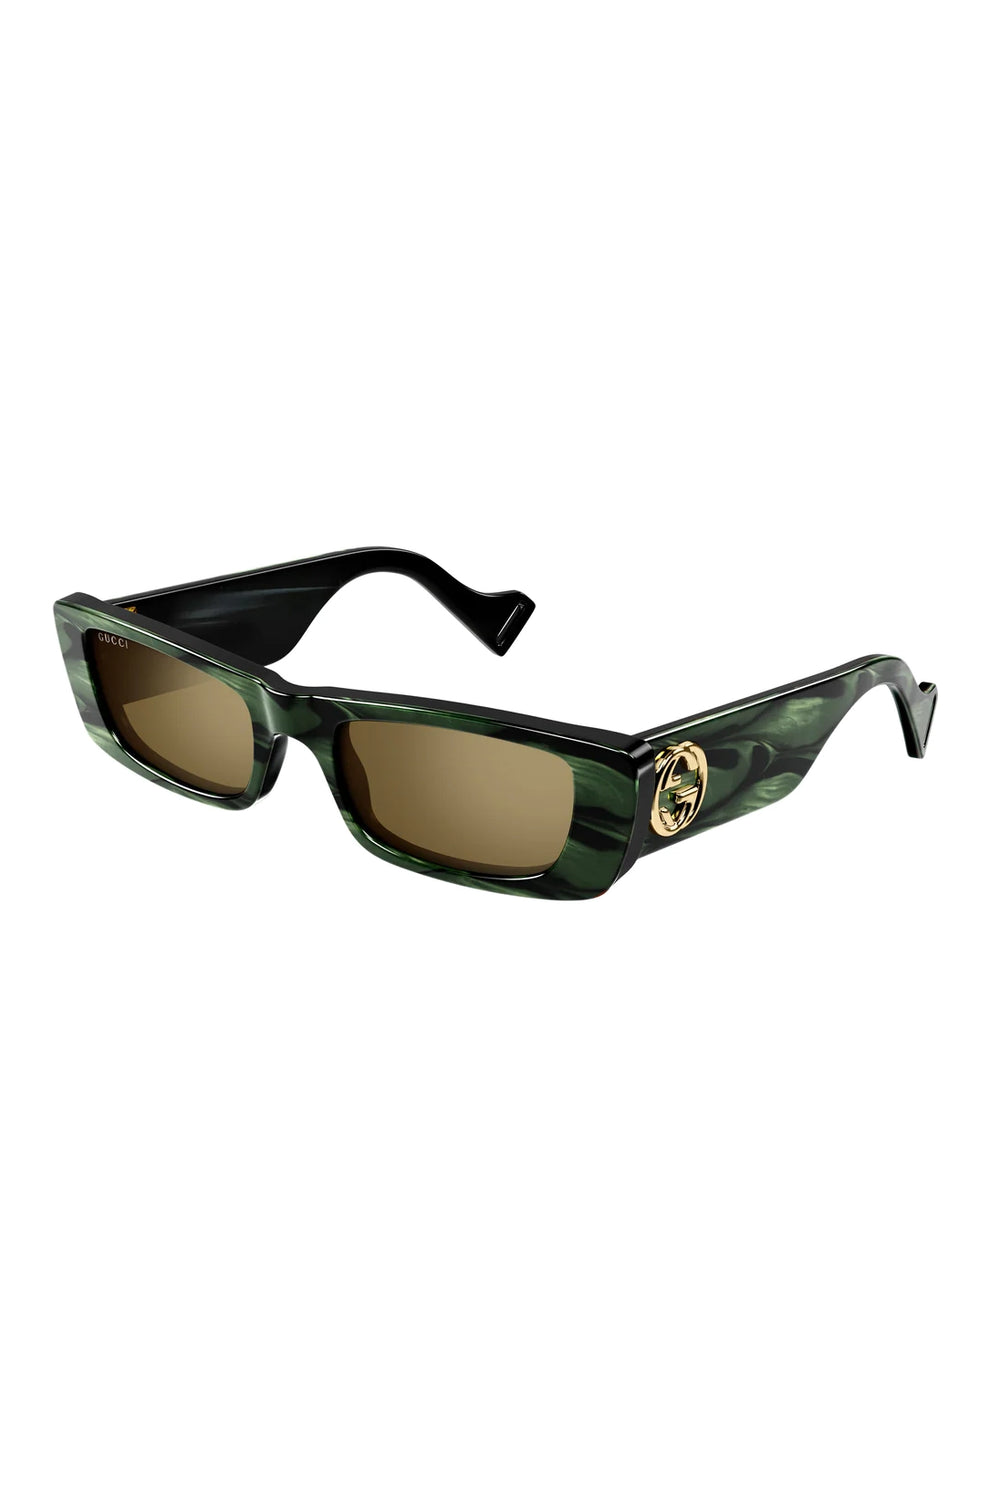 Gucci Rectangular Sunglasses Green GG0516S014